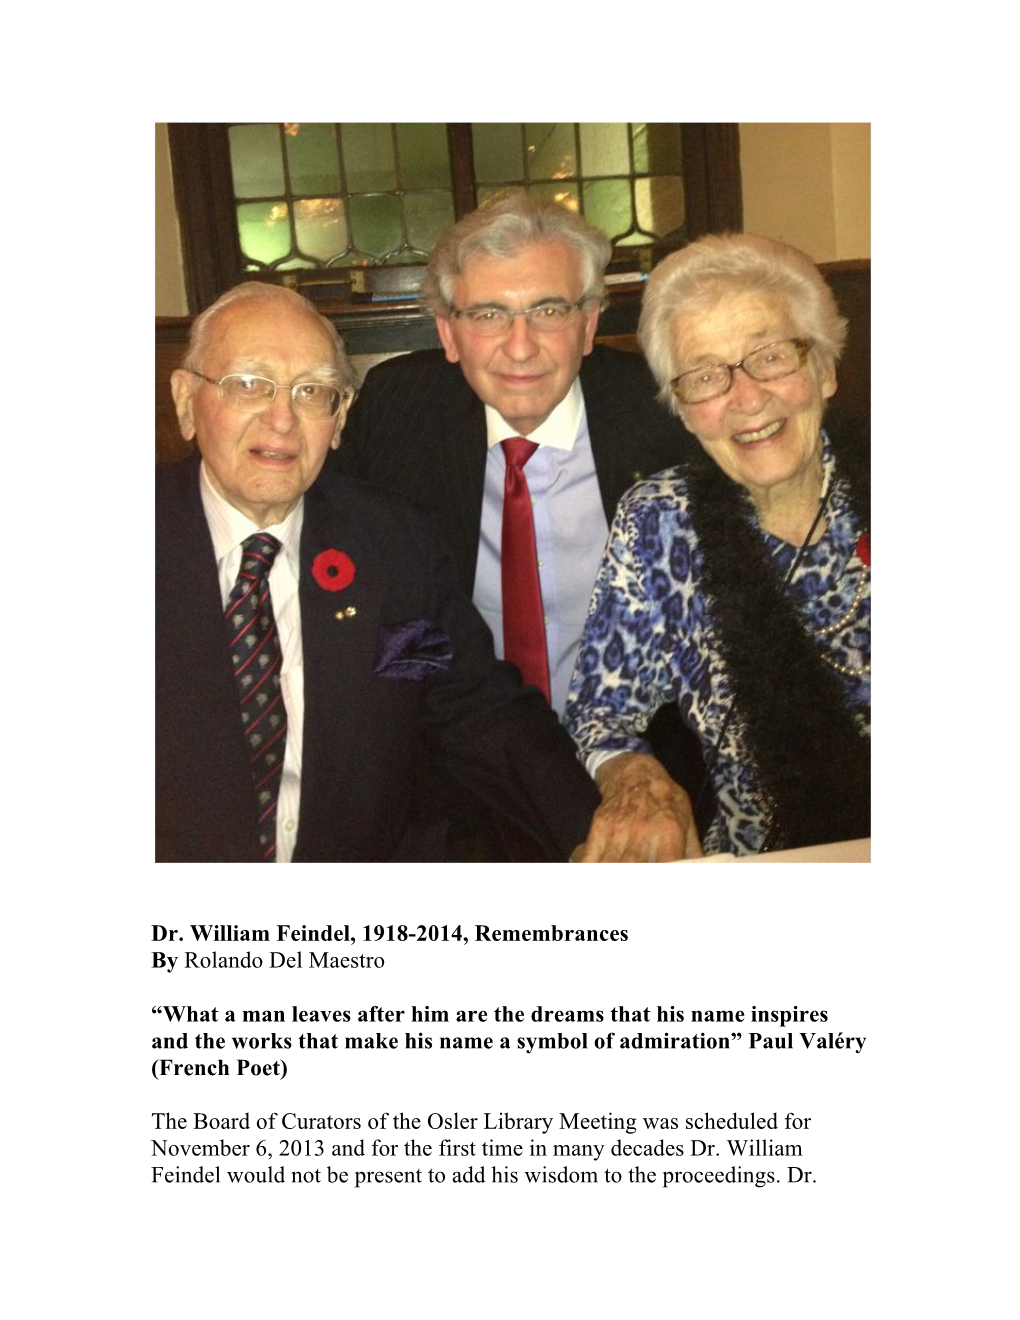 Dr. William Feindel, 1918-2014, Remembrances by Rolando Del Maestro